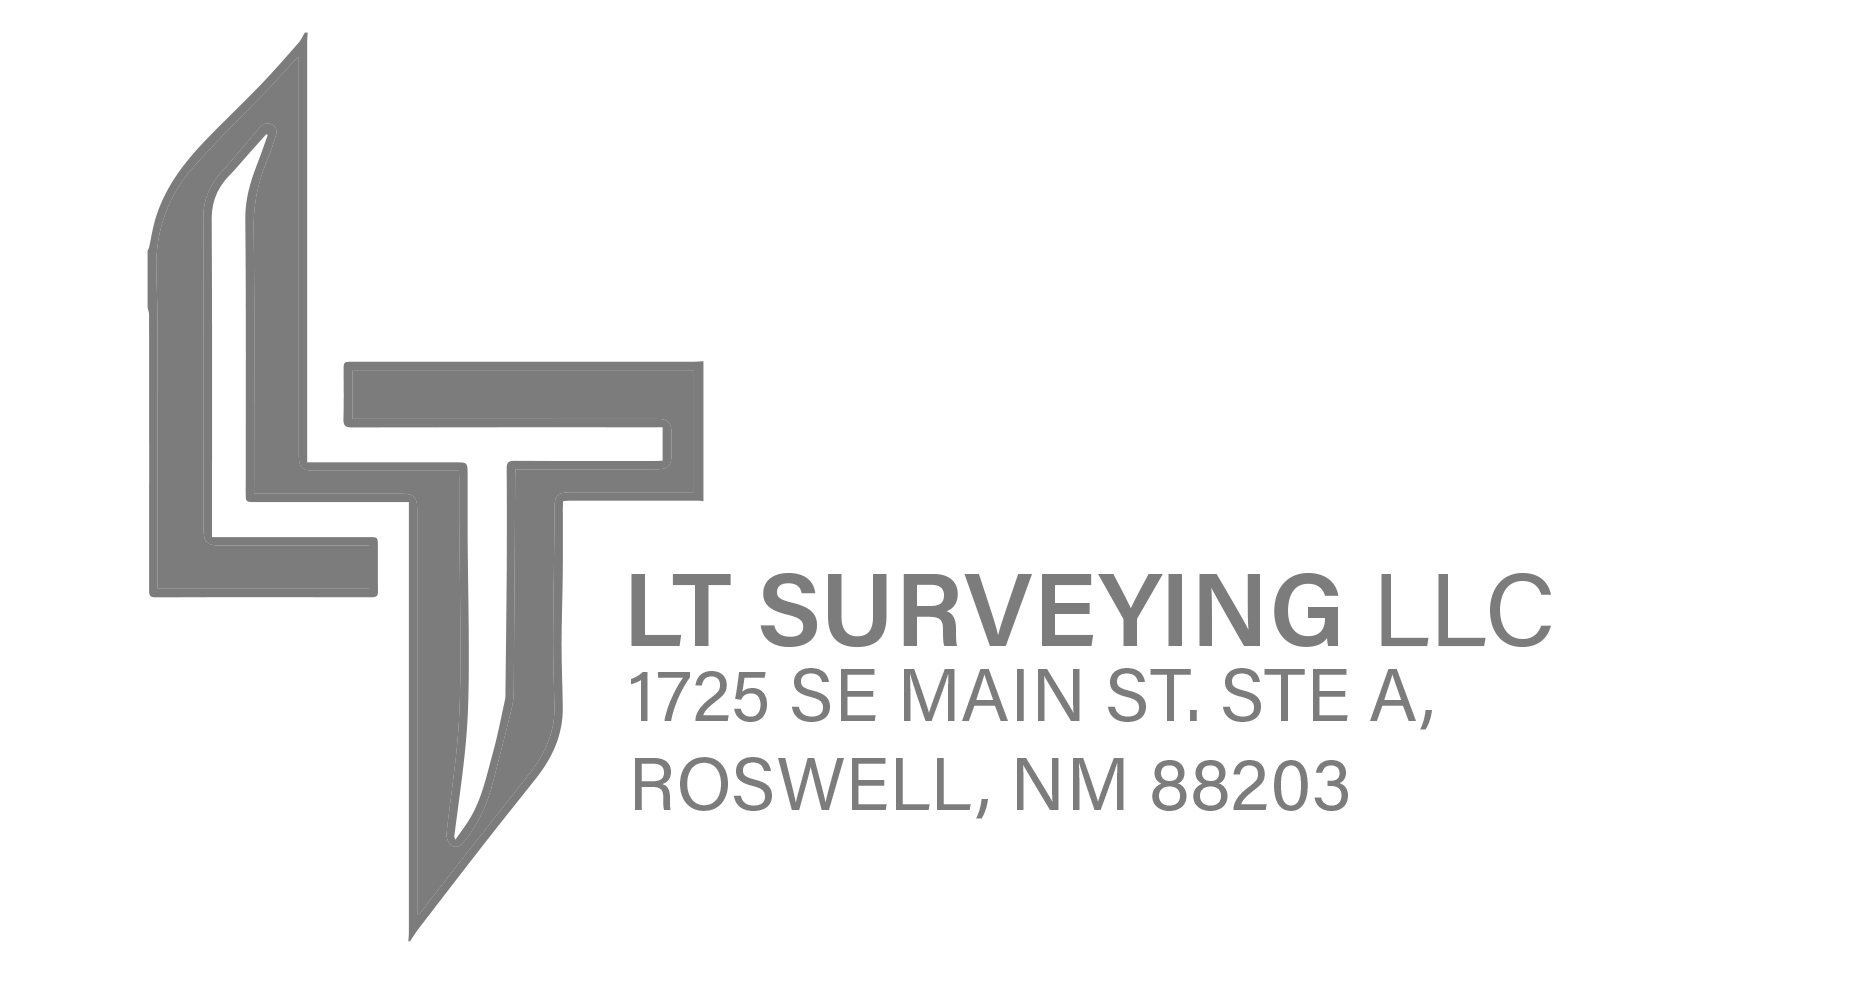 LT Surveying LLC